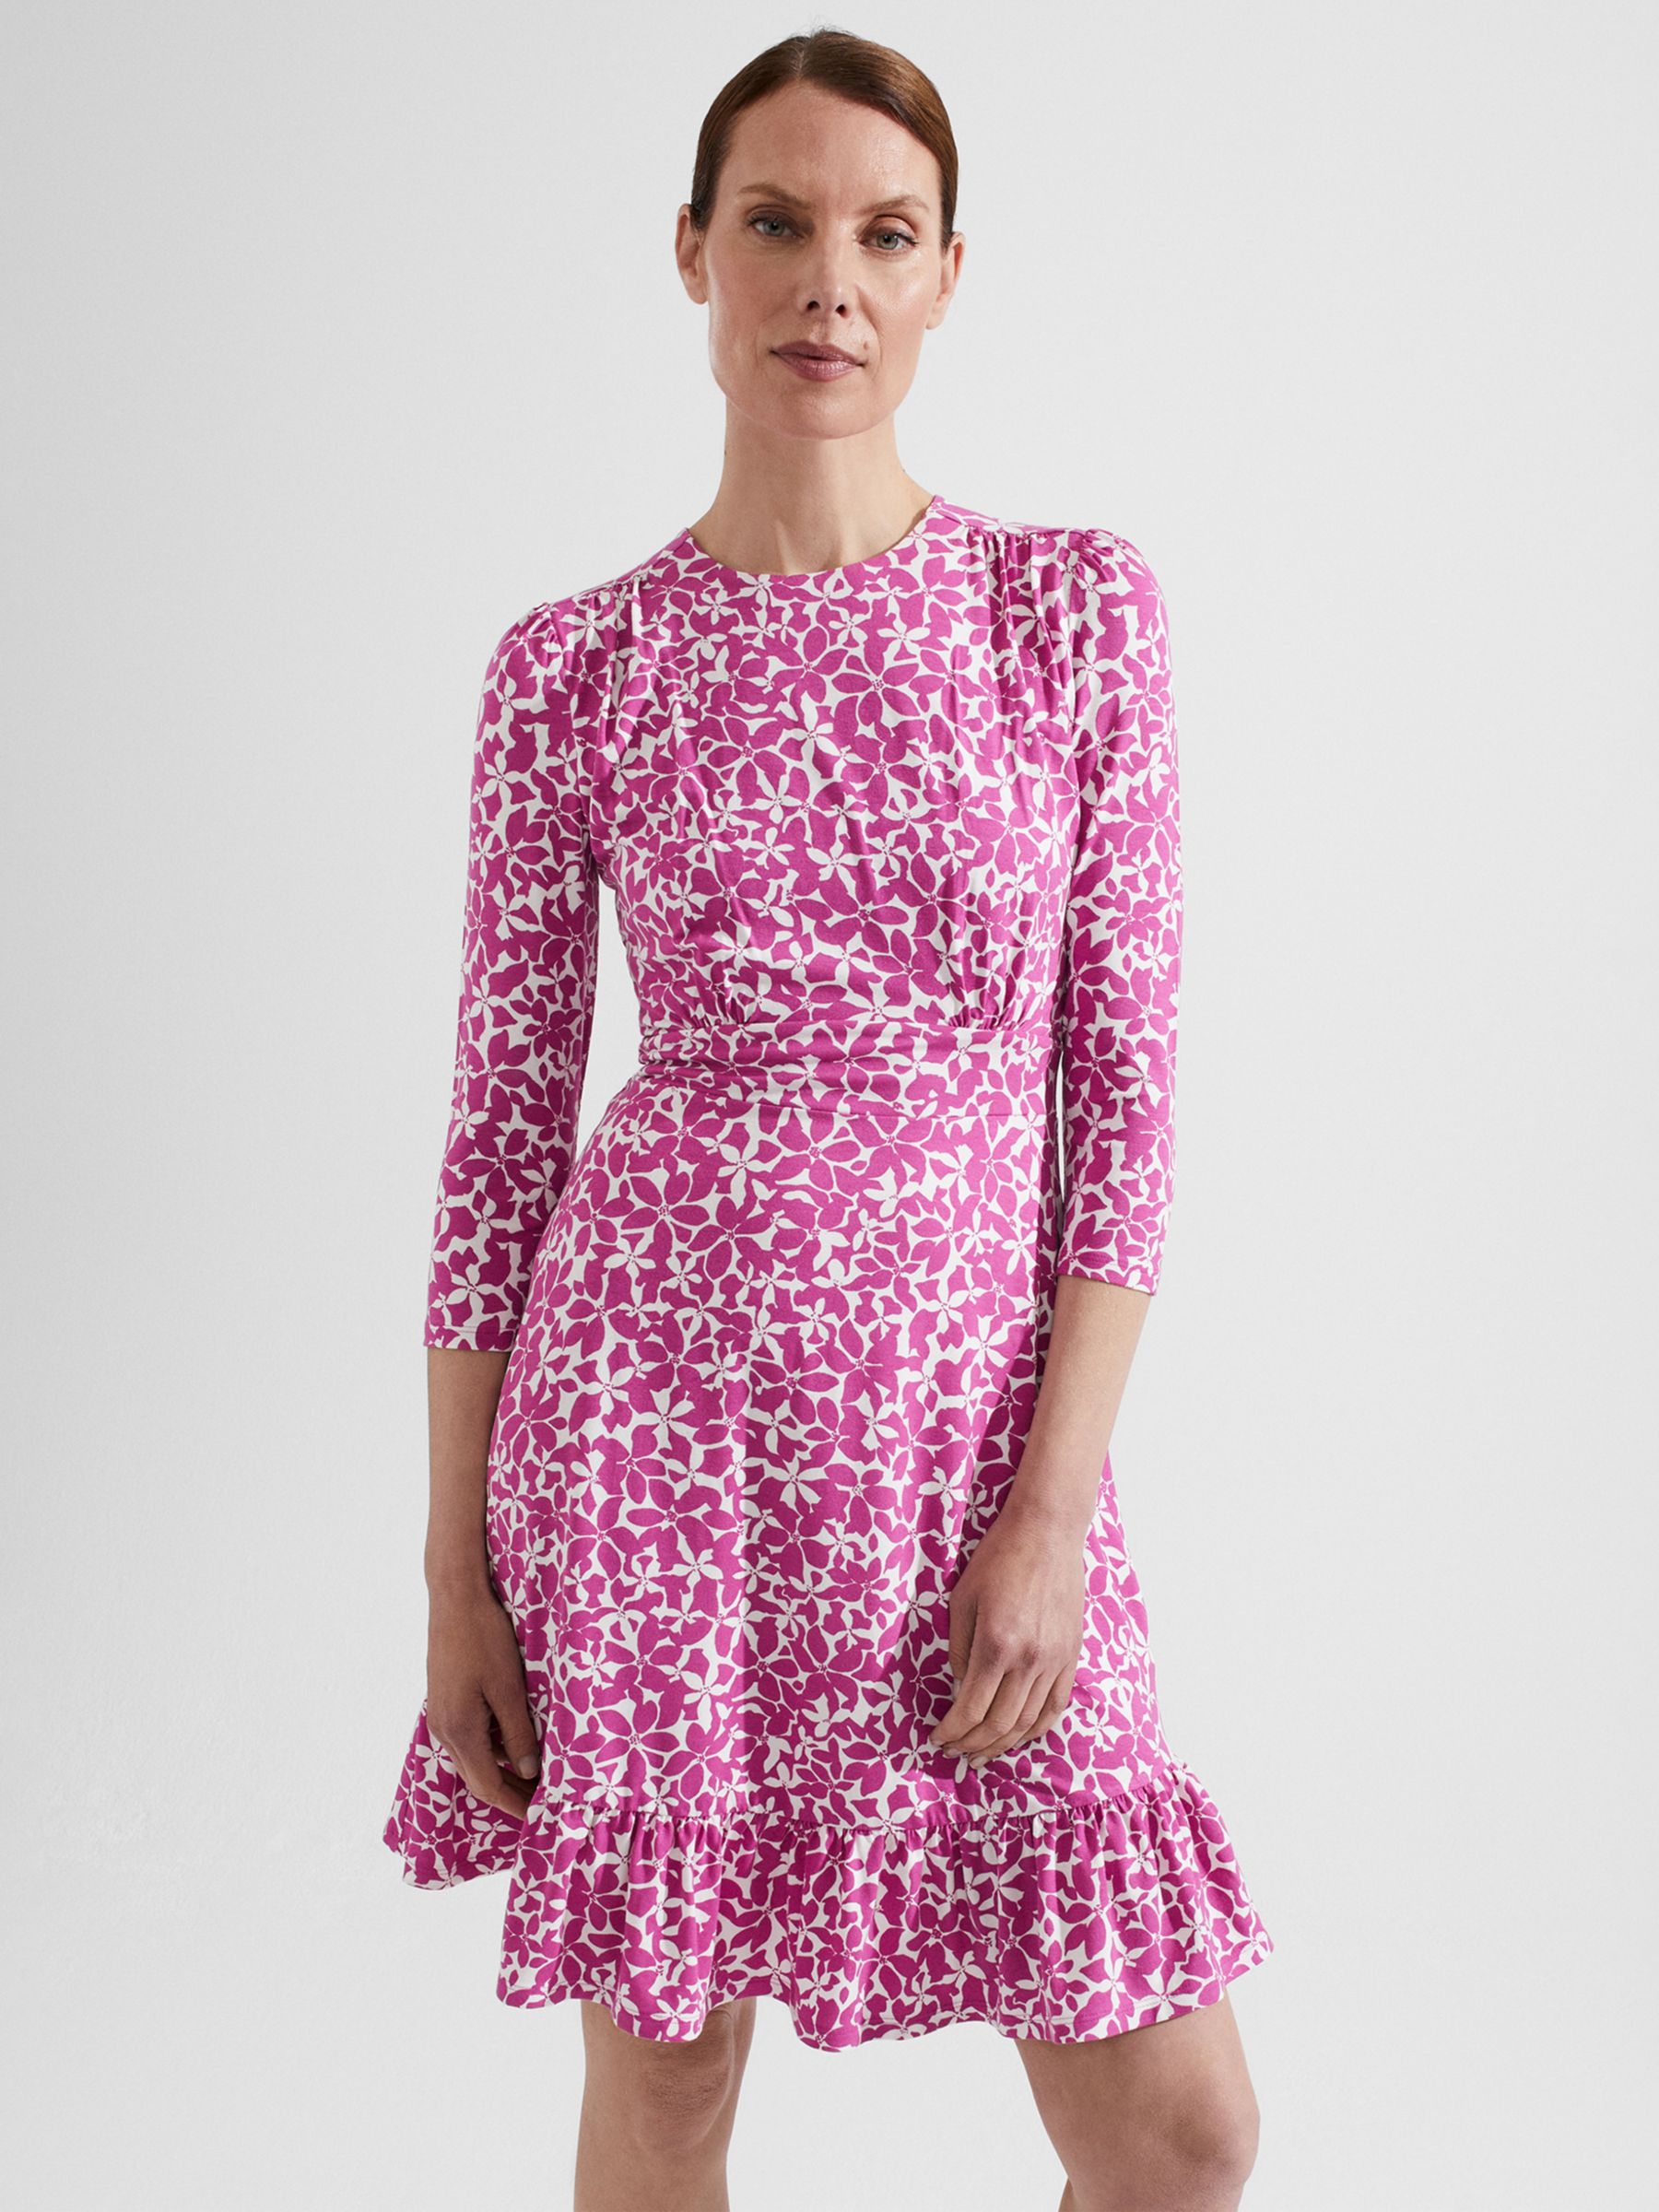 Hobbs Ami Floral Jersey Dress, Pink/Multi at John Lewis & Partners